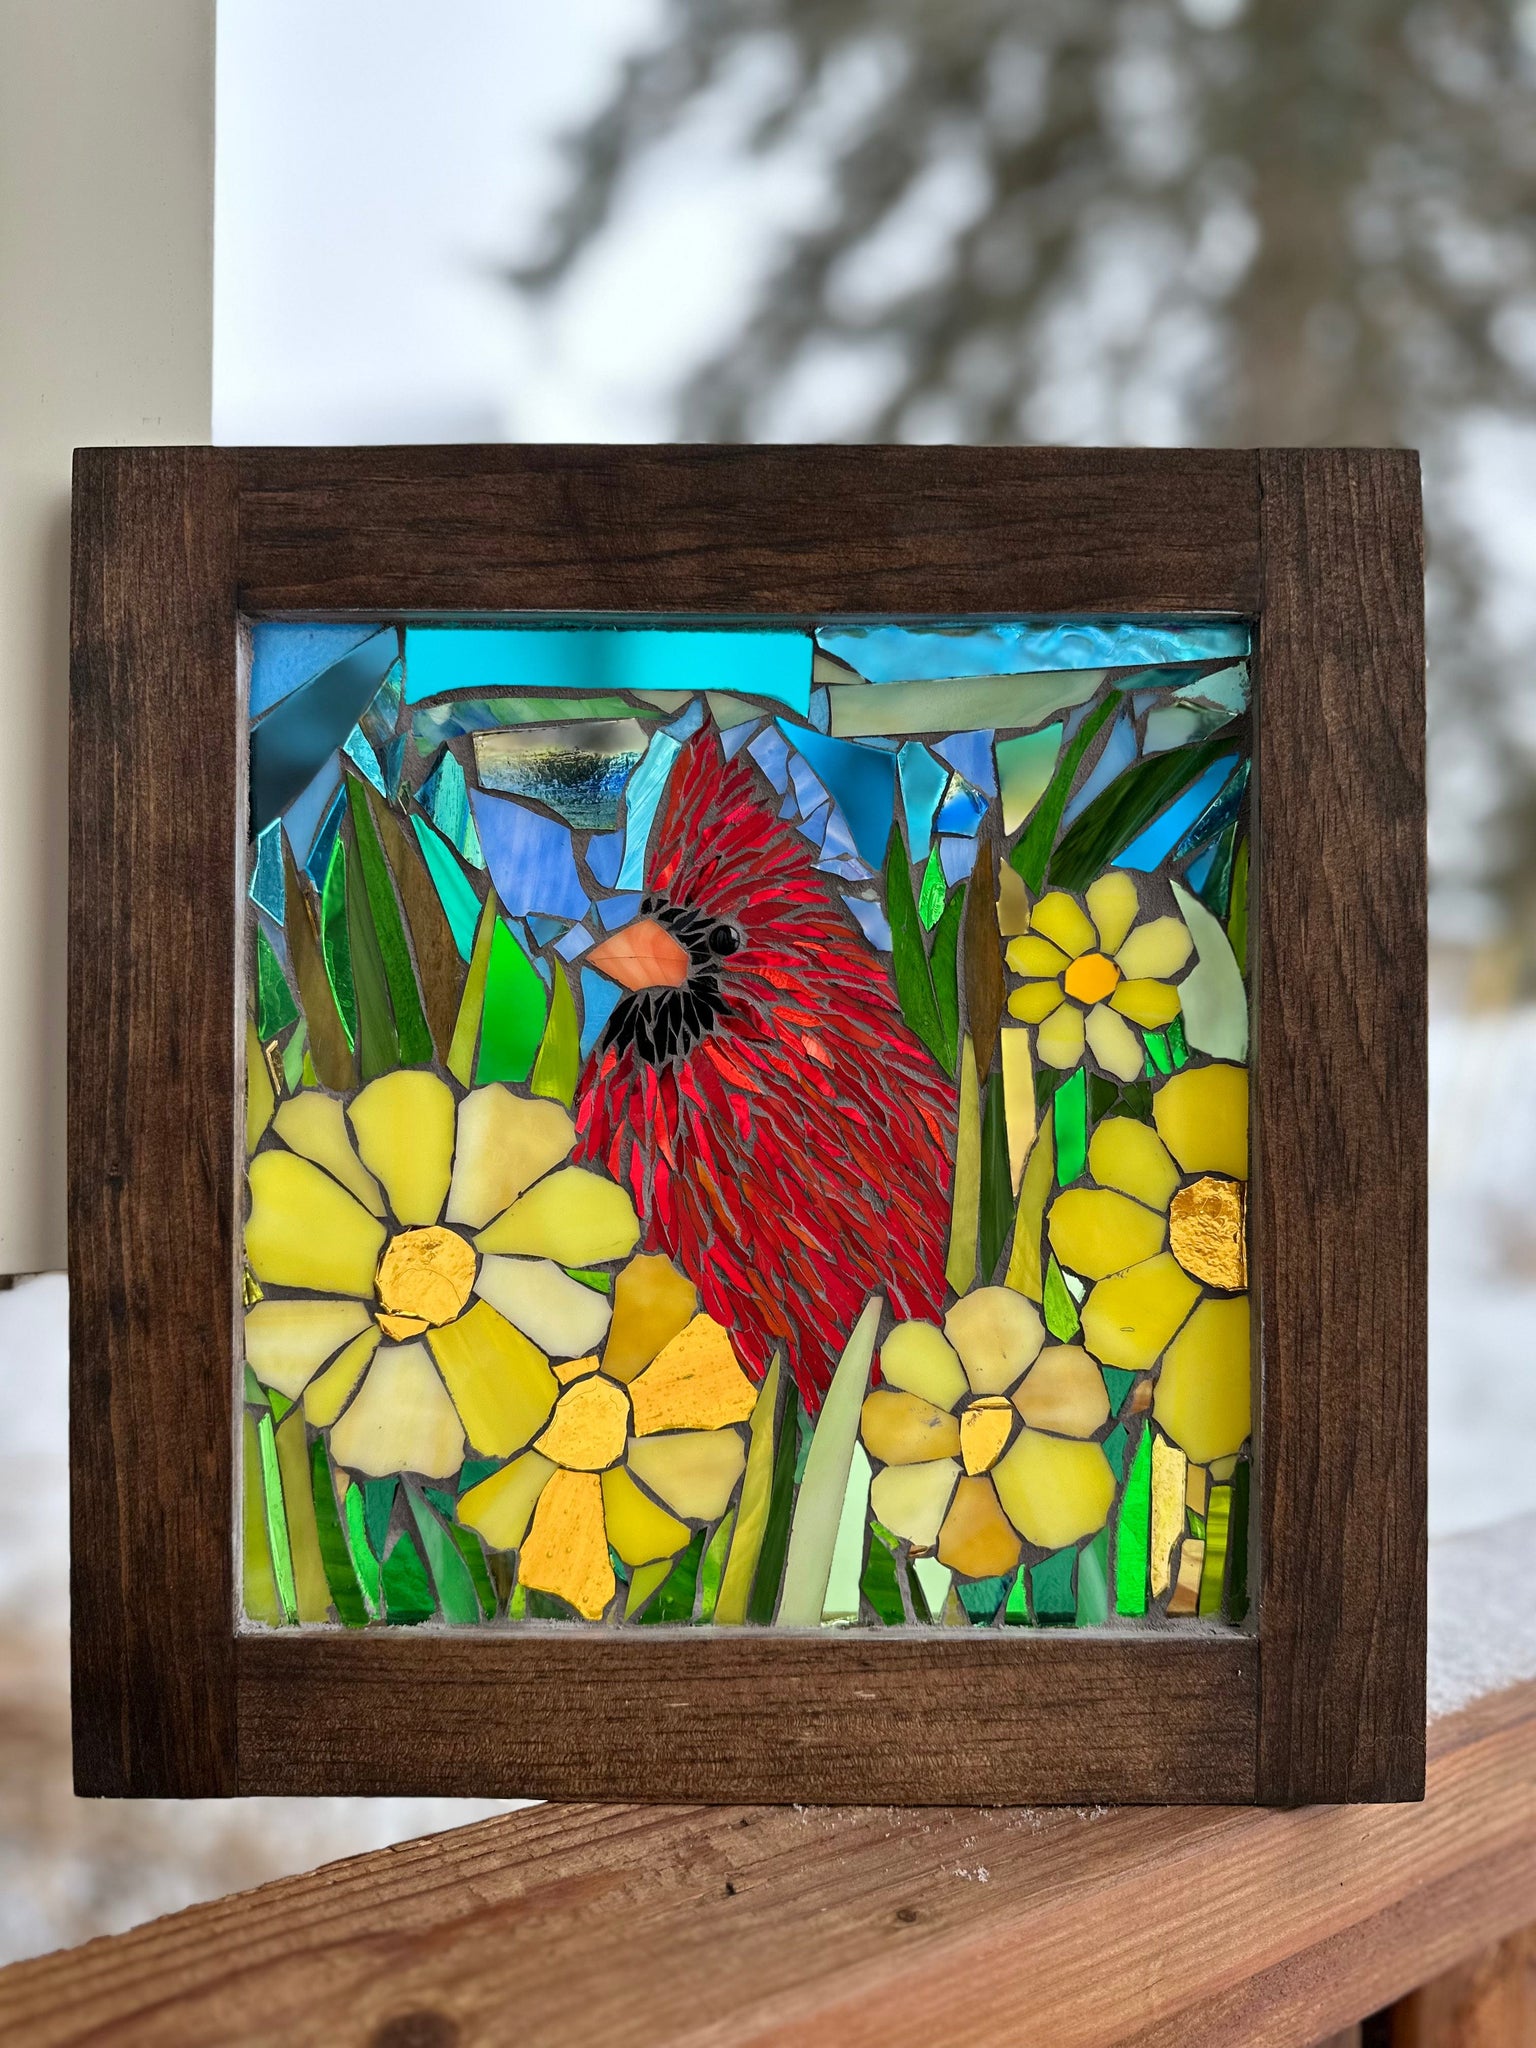 Cindy Laneville - Mosaic Artist Windows Red Cardinal